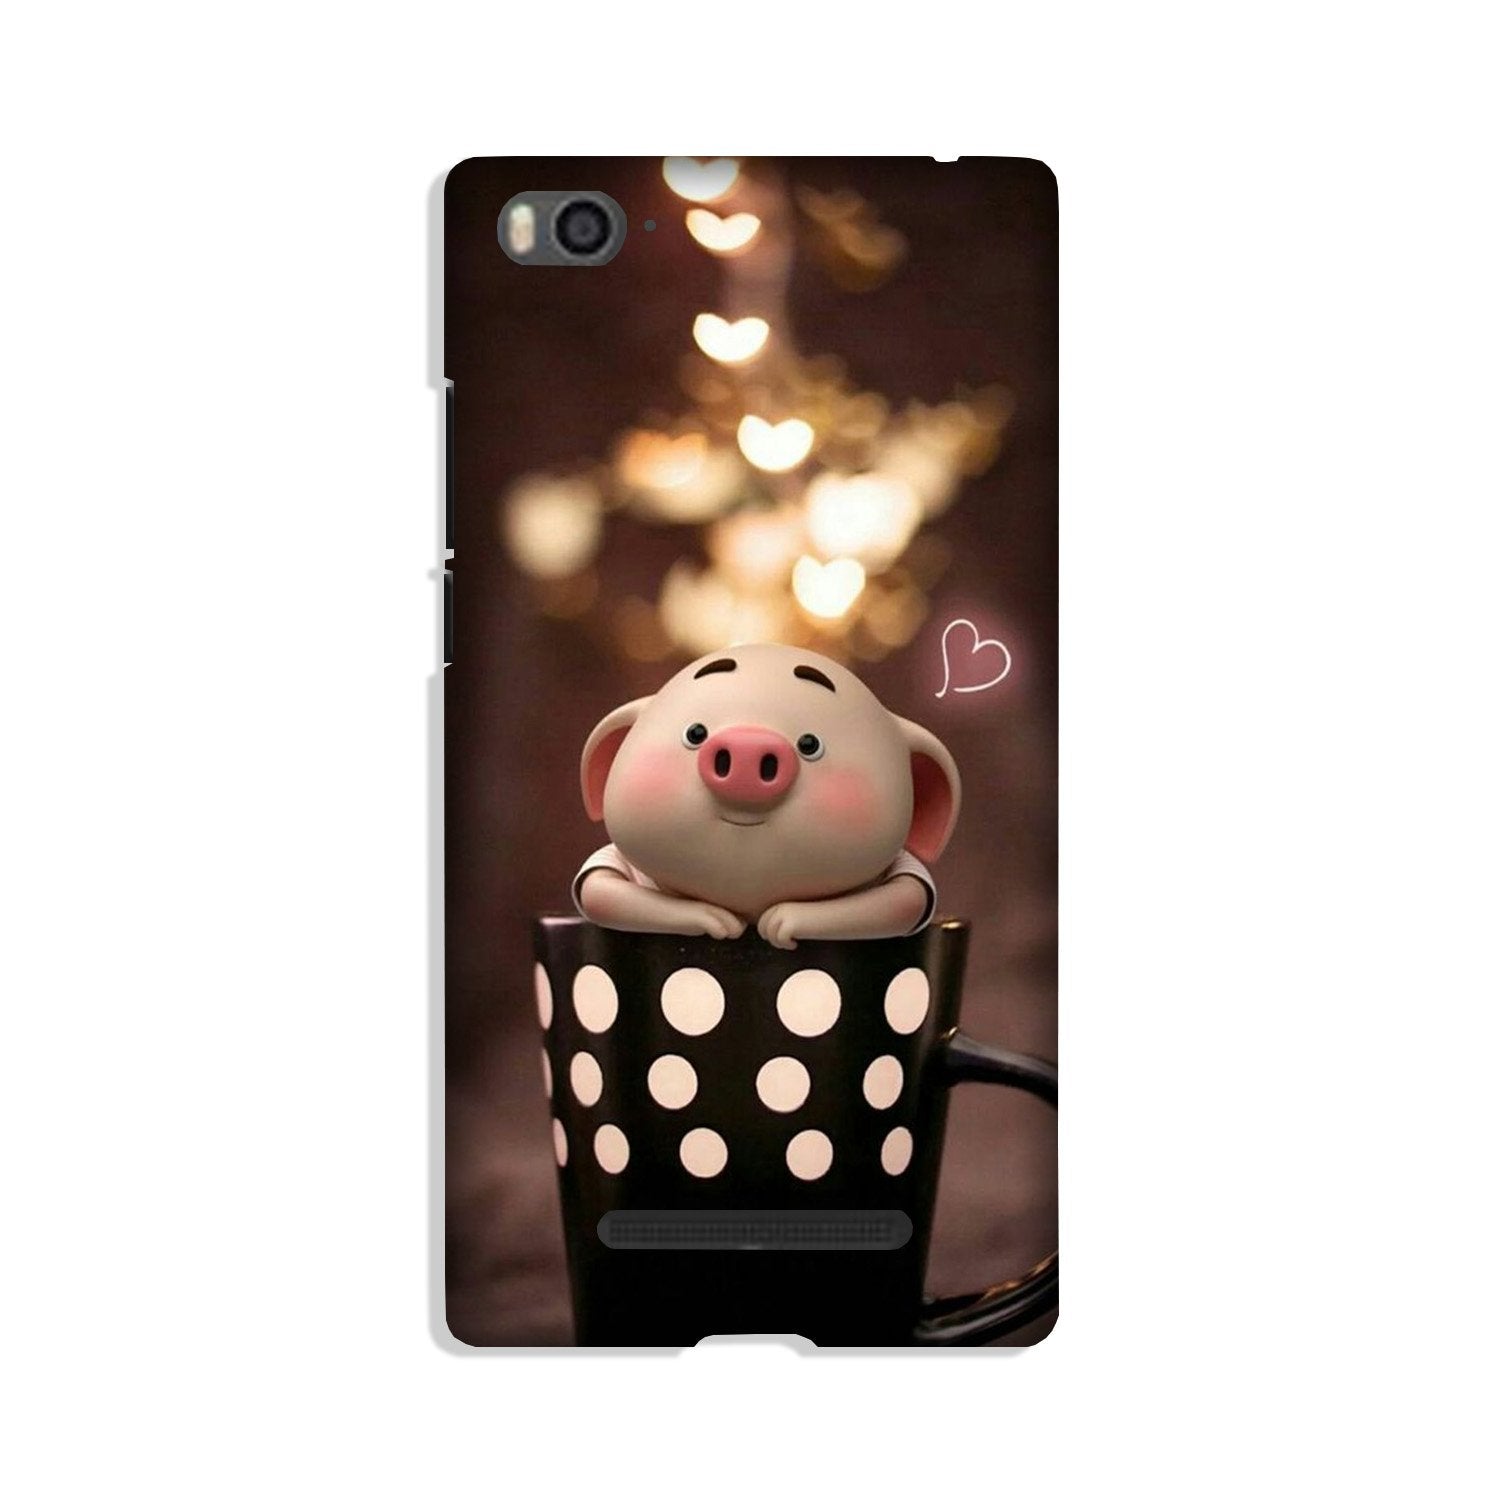 Cute Bunny Case for Xiaomi Redmi 5A (Design No. 213)